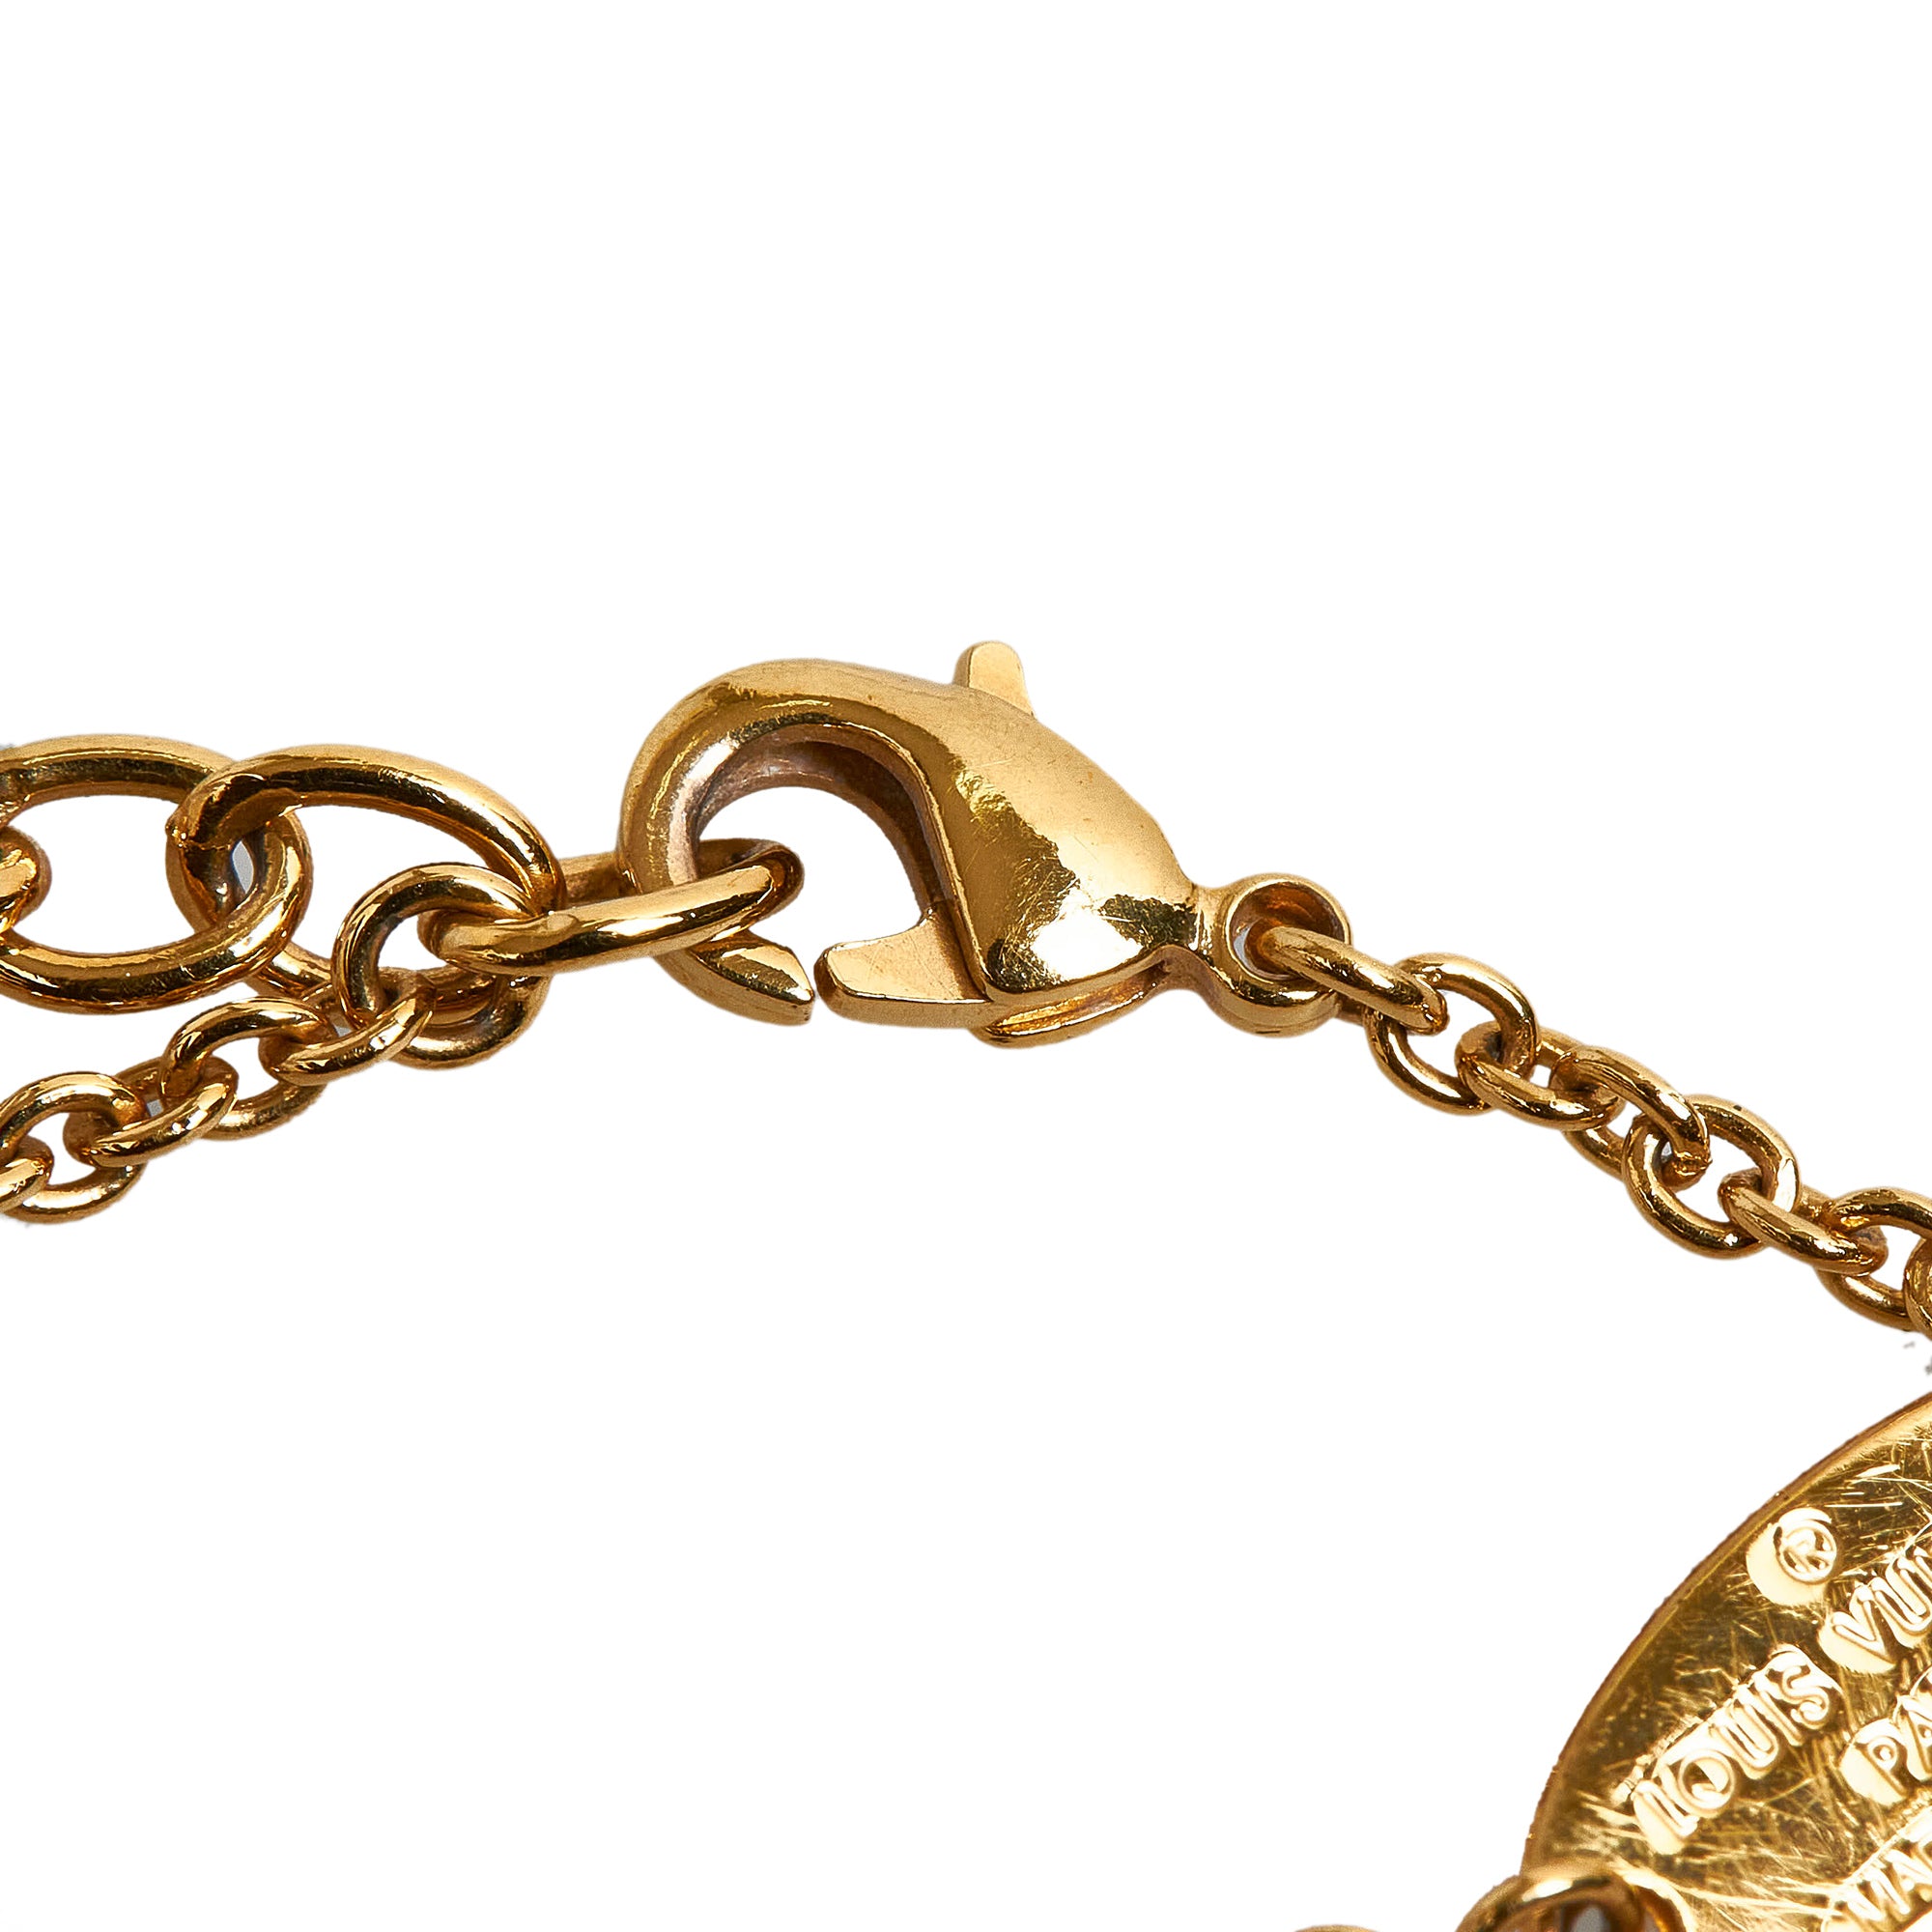 Louis Vuitton Authenticated Blooming Bracelet